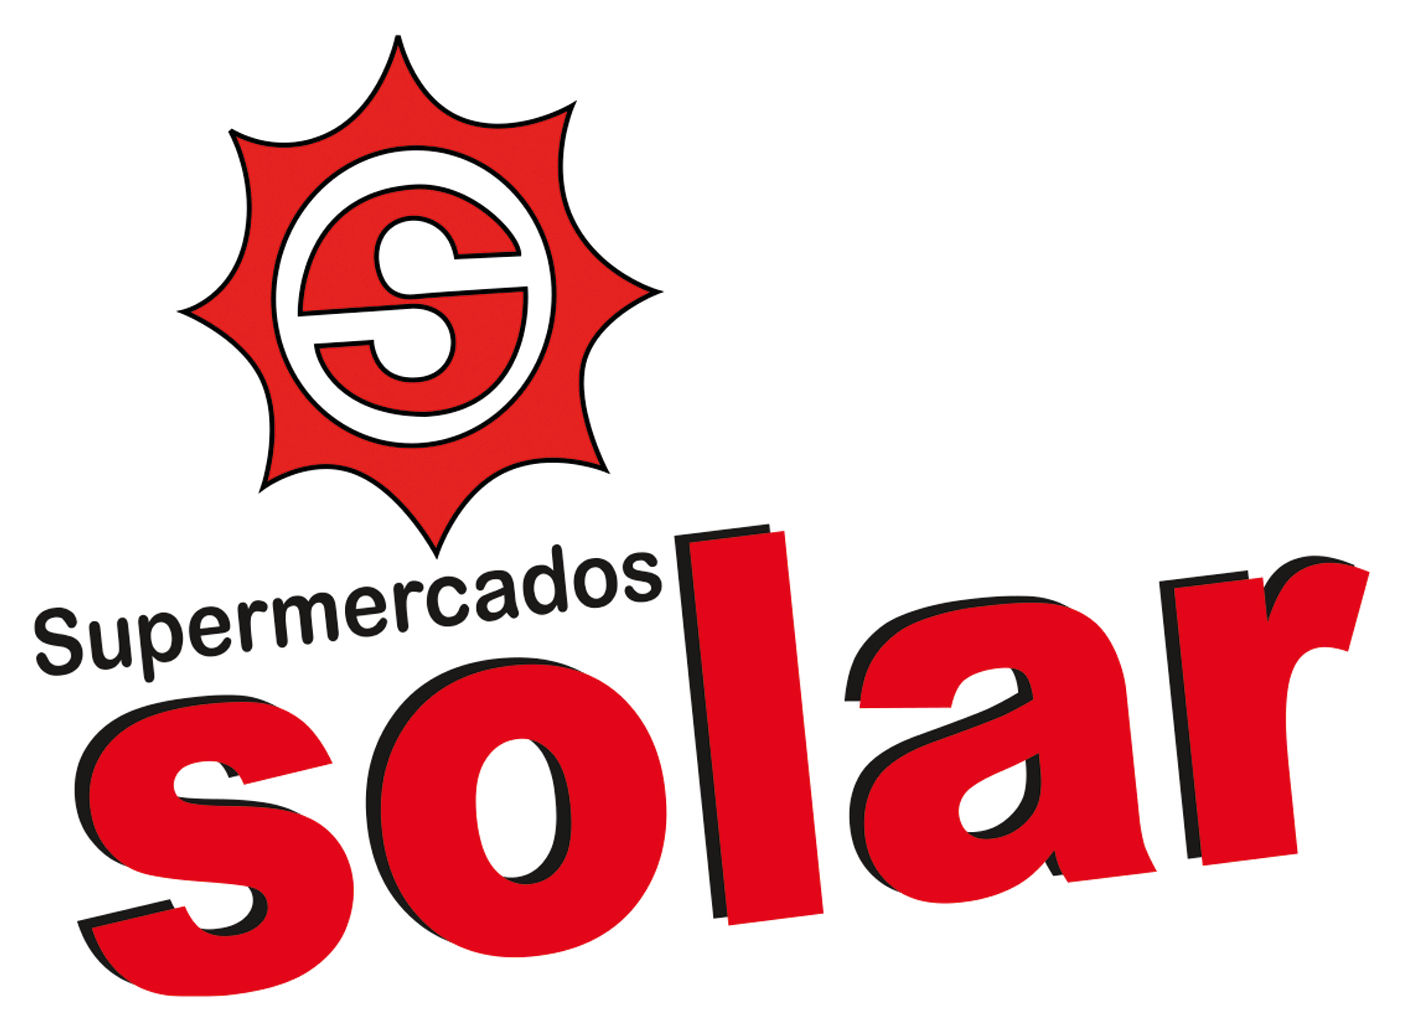 Foto do empreendimento Solar Supermercado